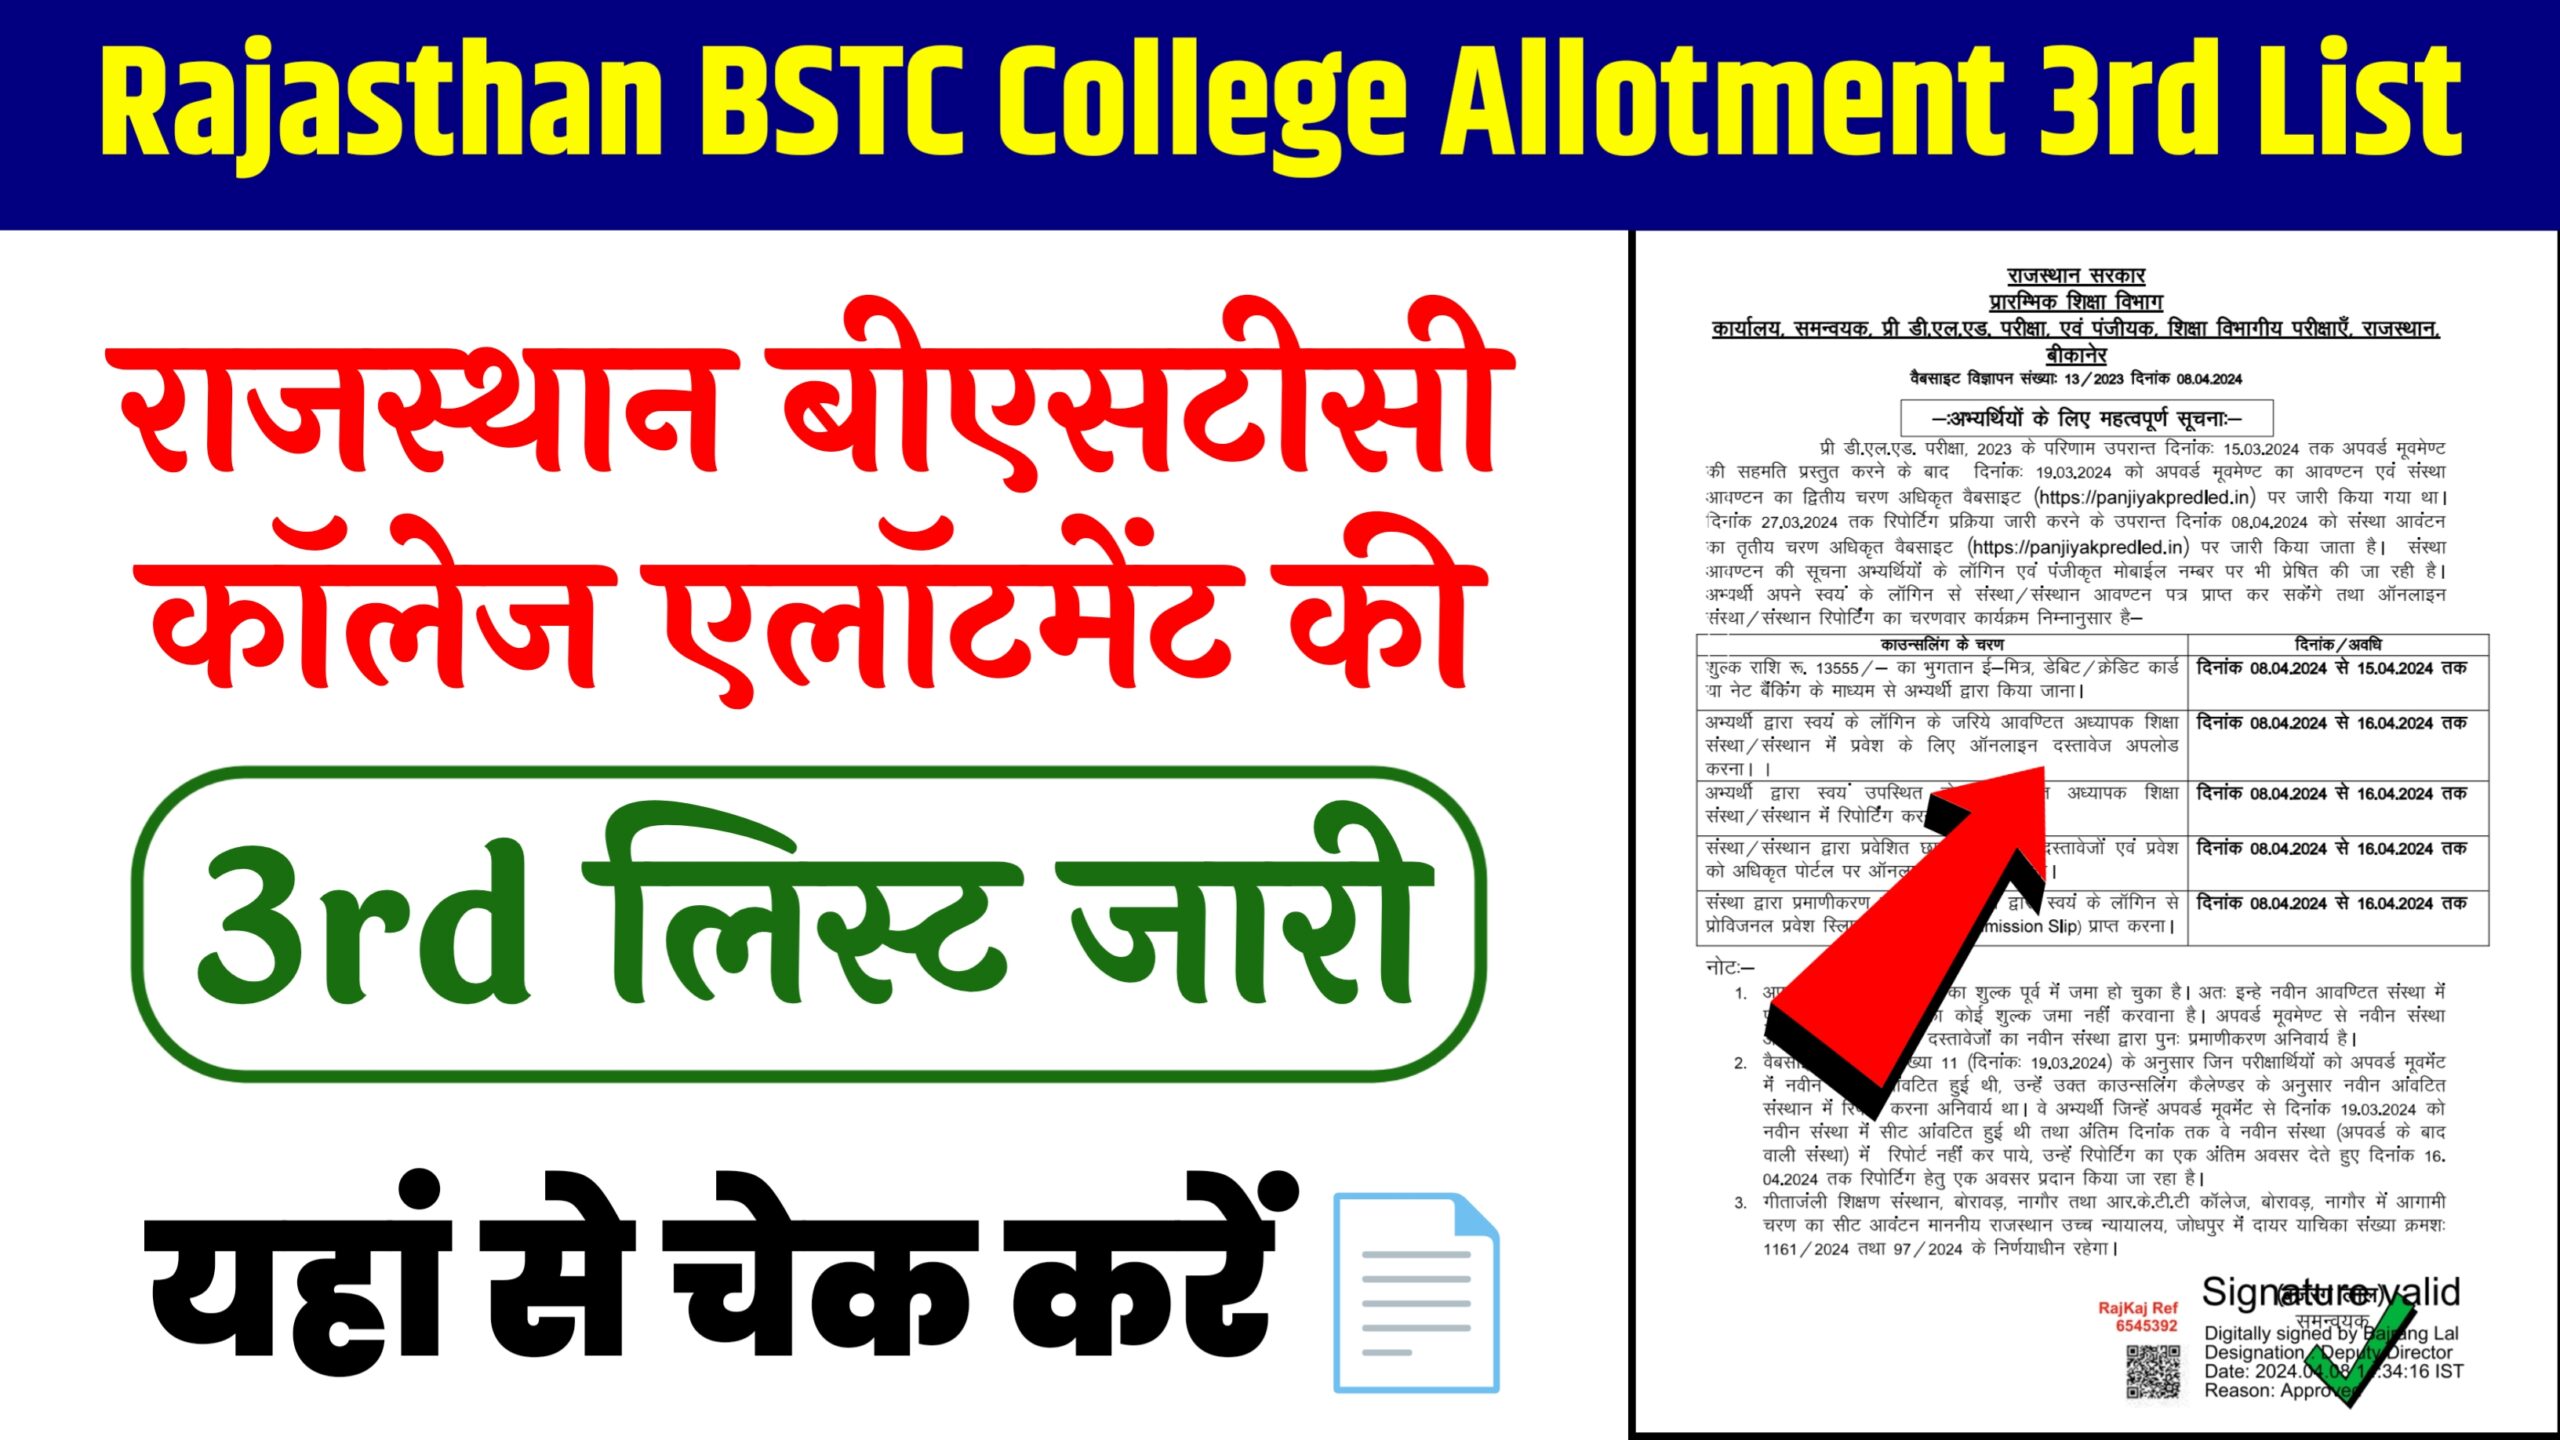 Rajasthan BSTC College Allotment 3rd List